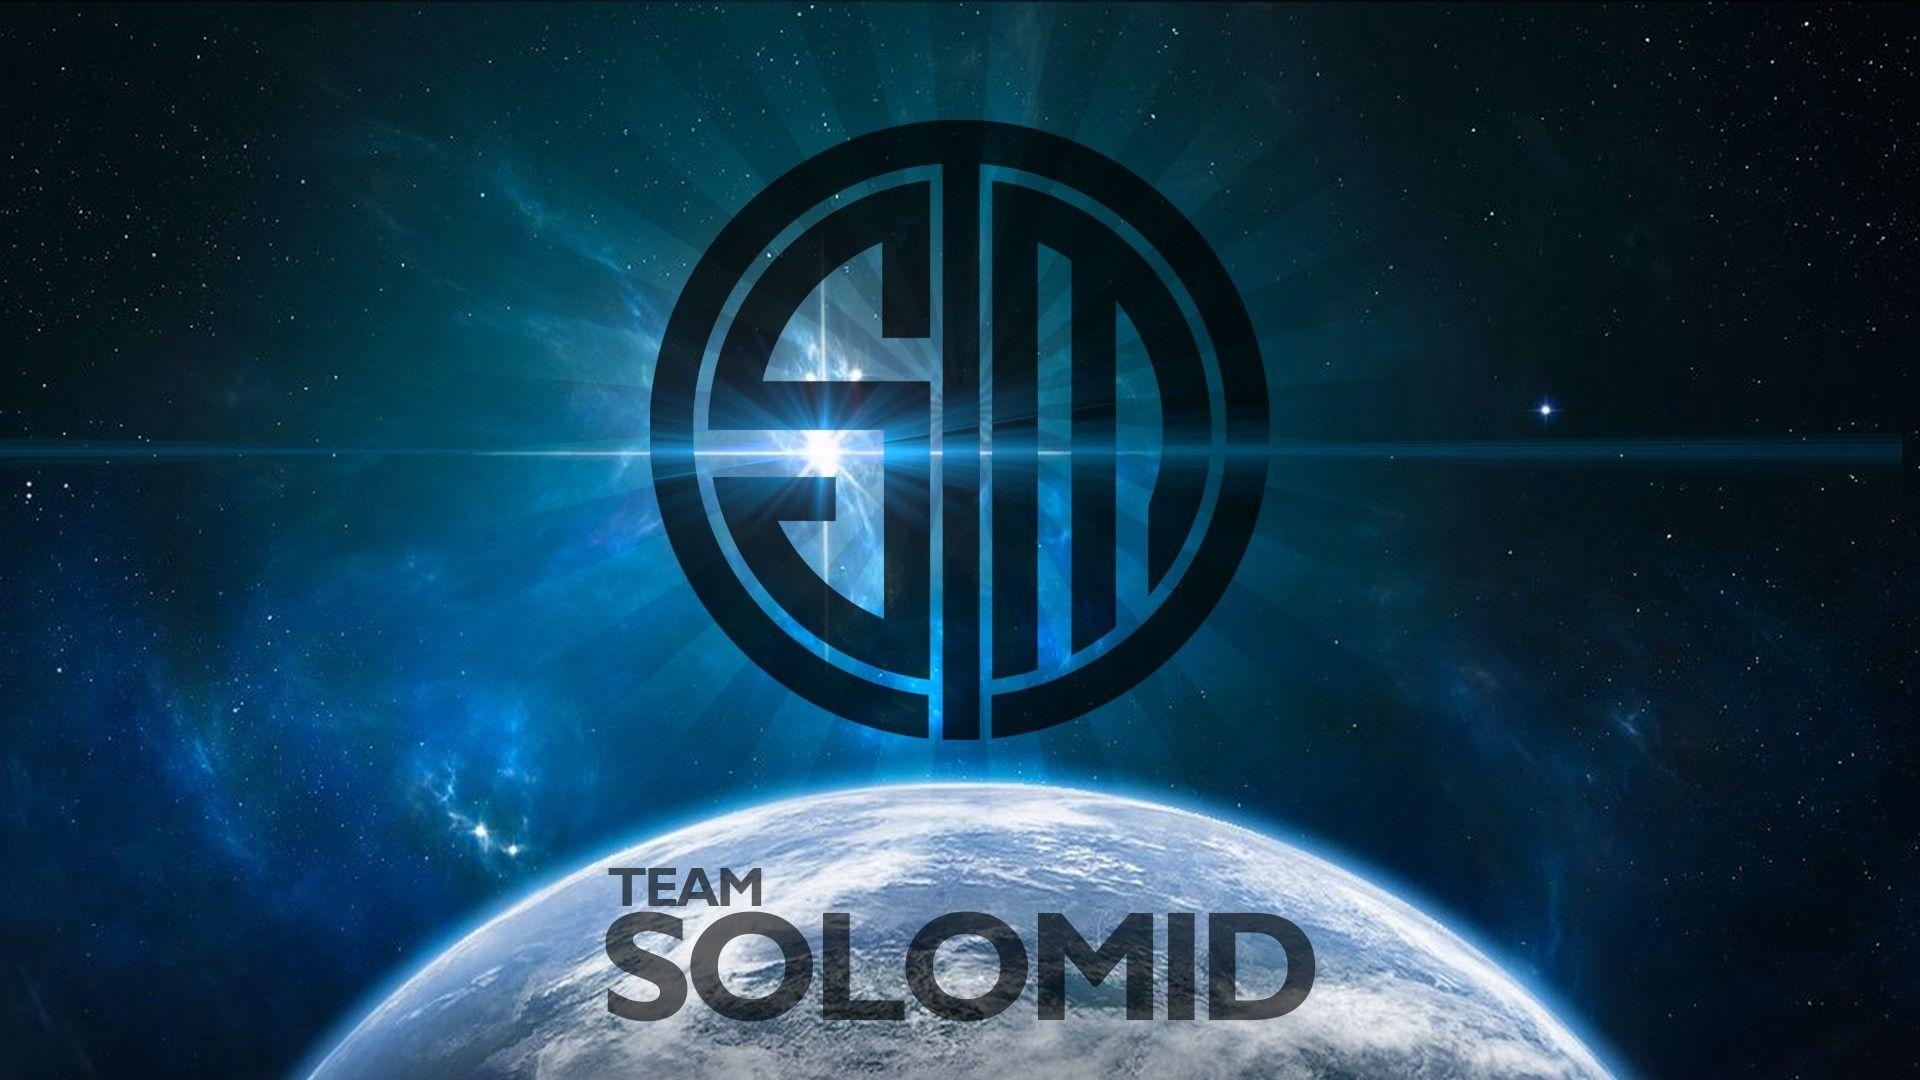 Team Solomid Wallpaper